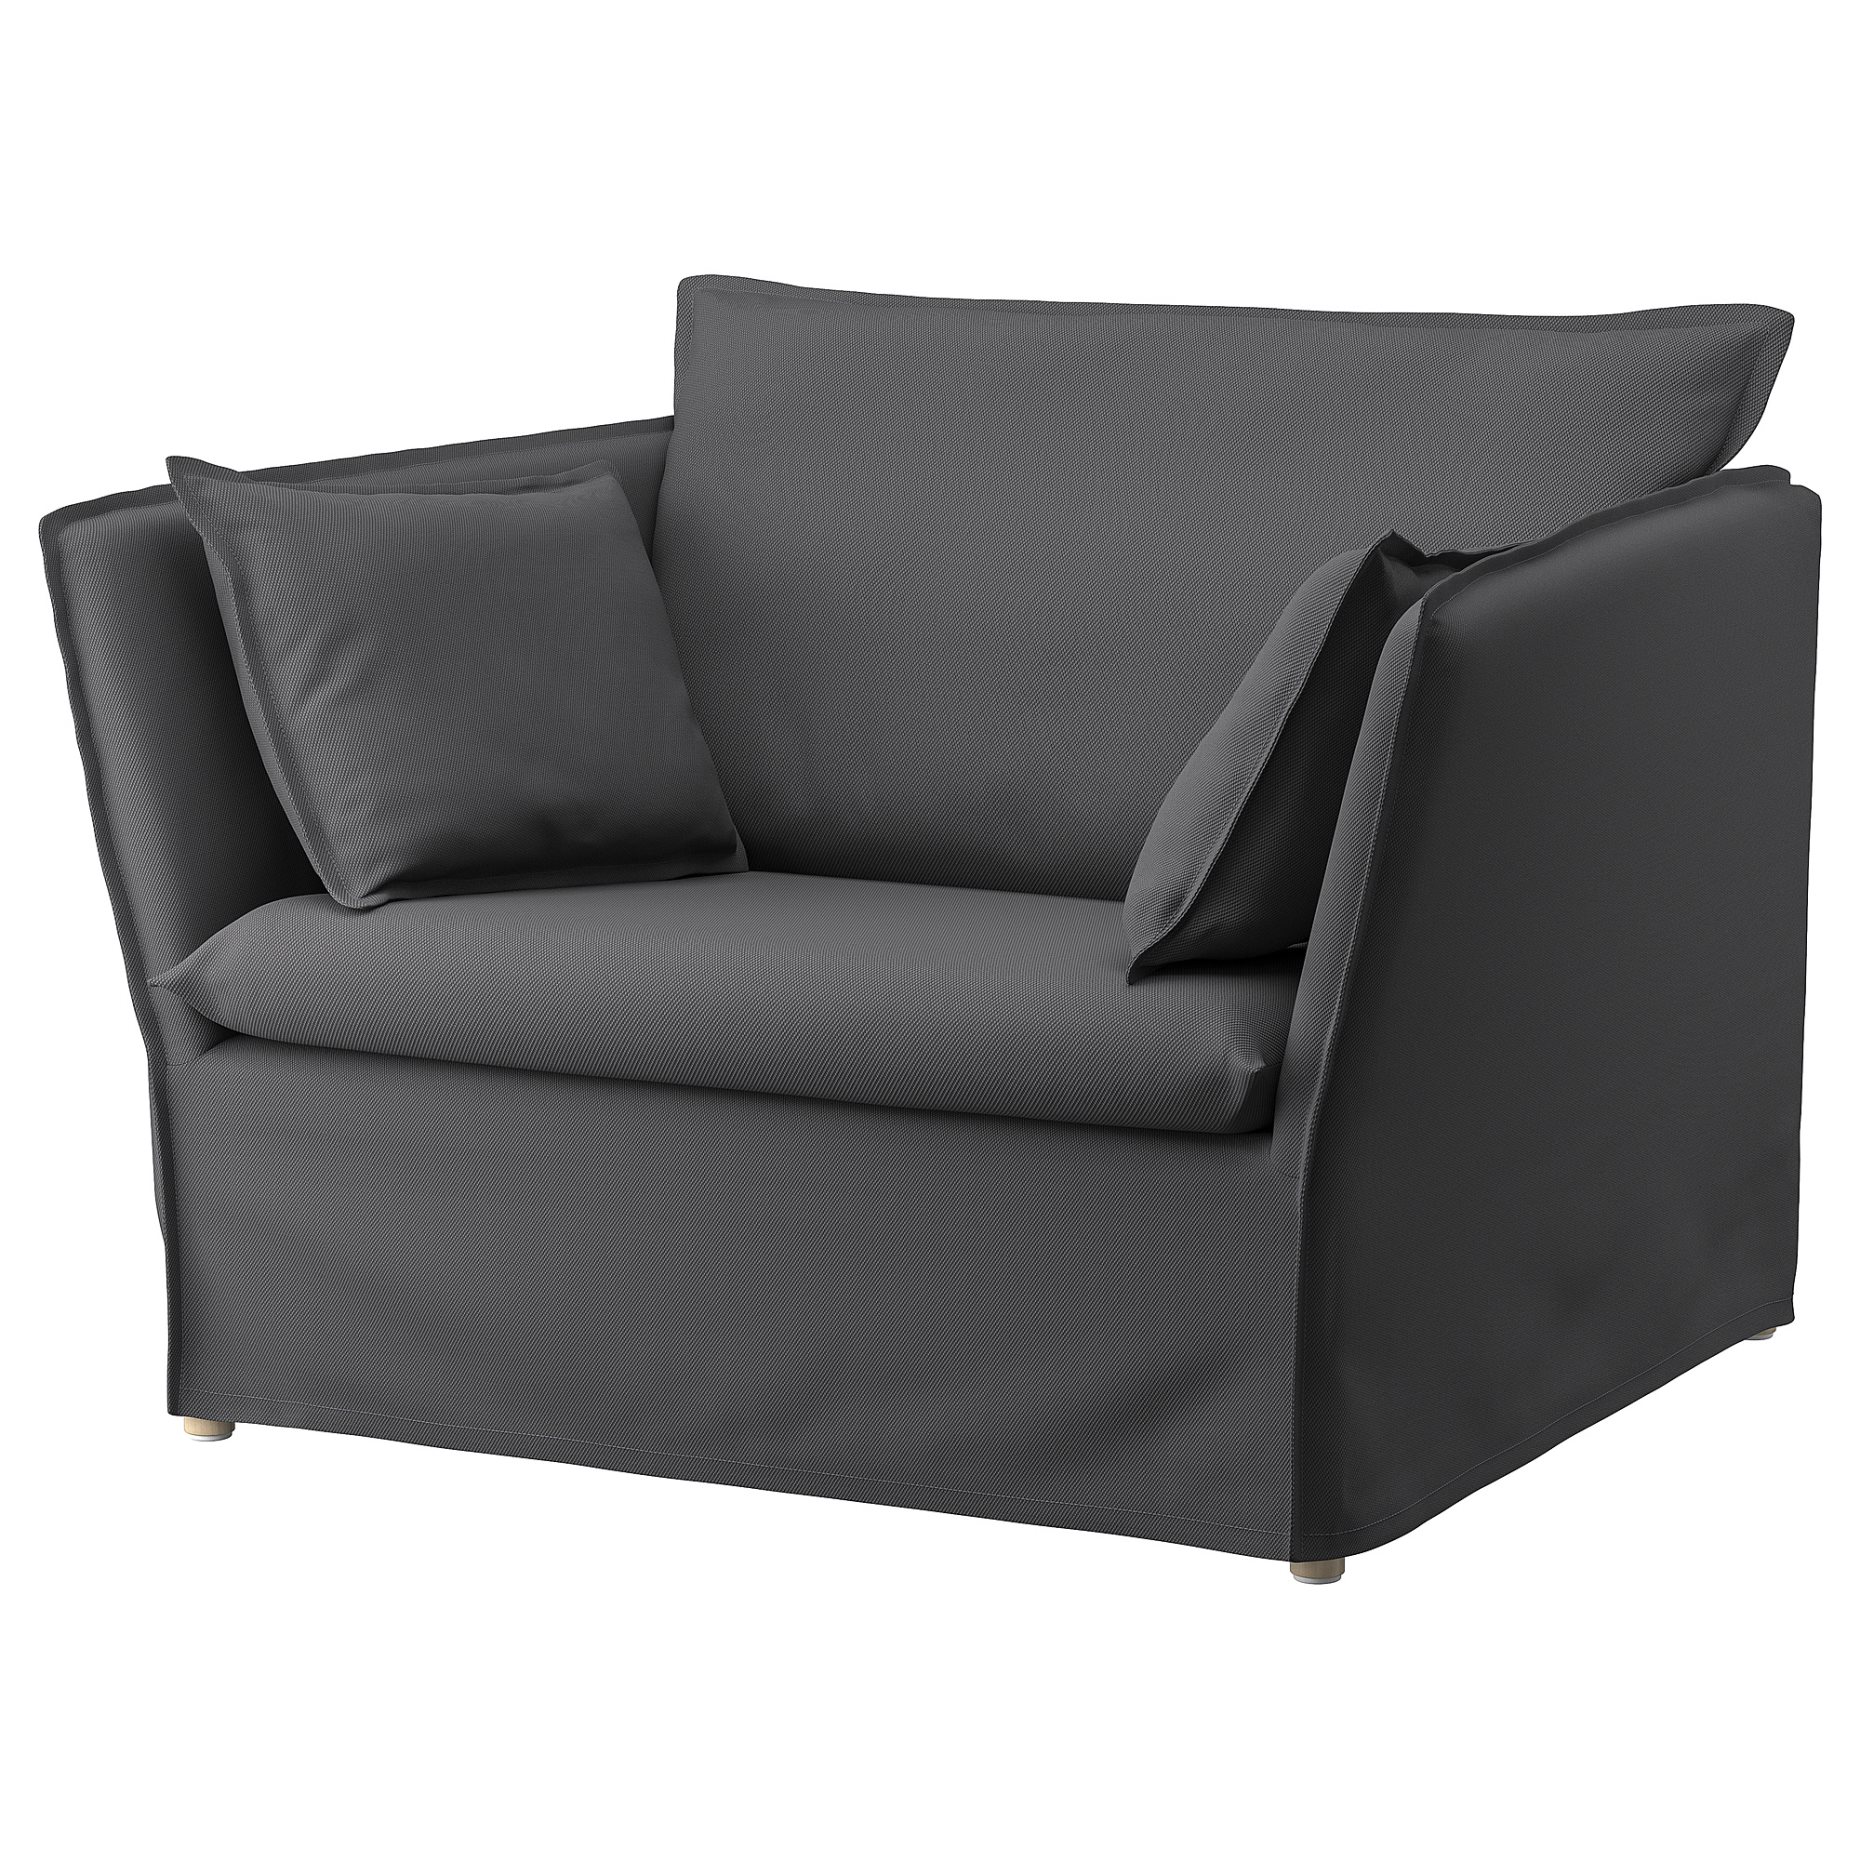 BACKSÄLEN, cover for 1,5-seat armchair, 404.972.63